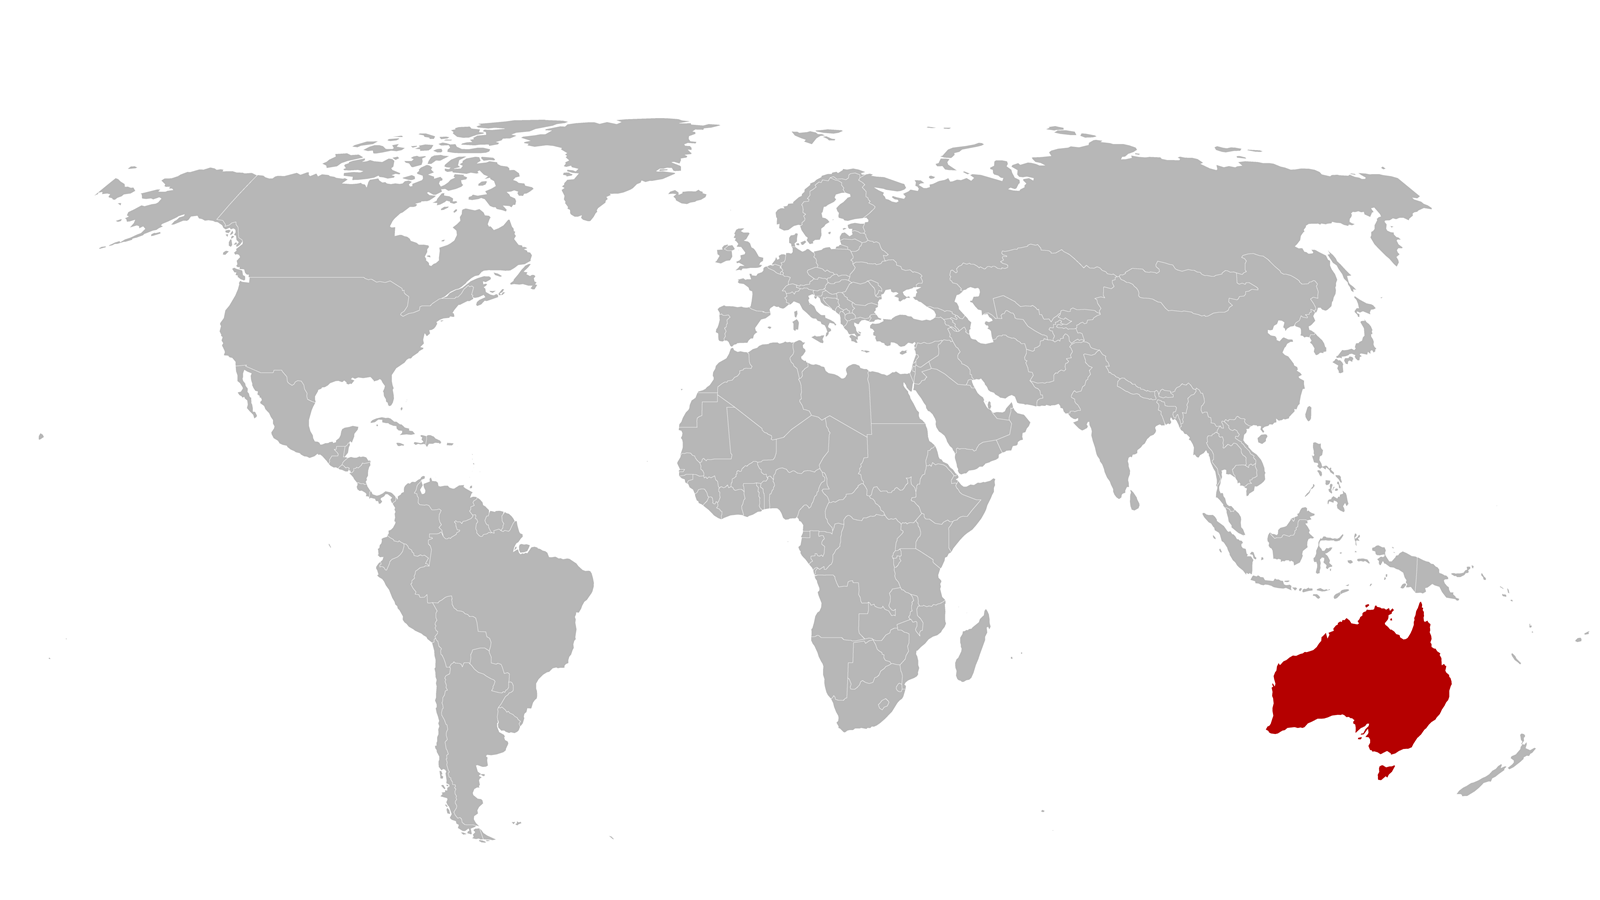 World map with Australia hightlighted